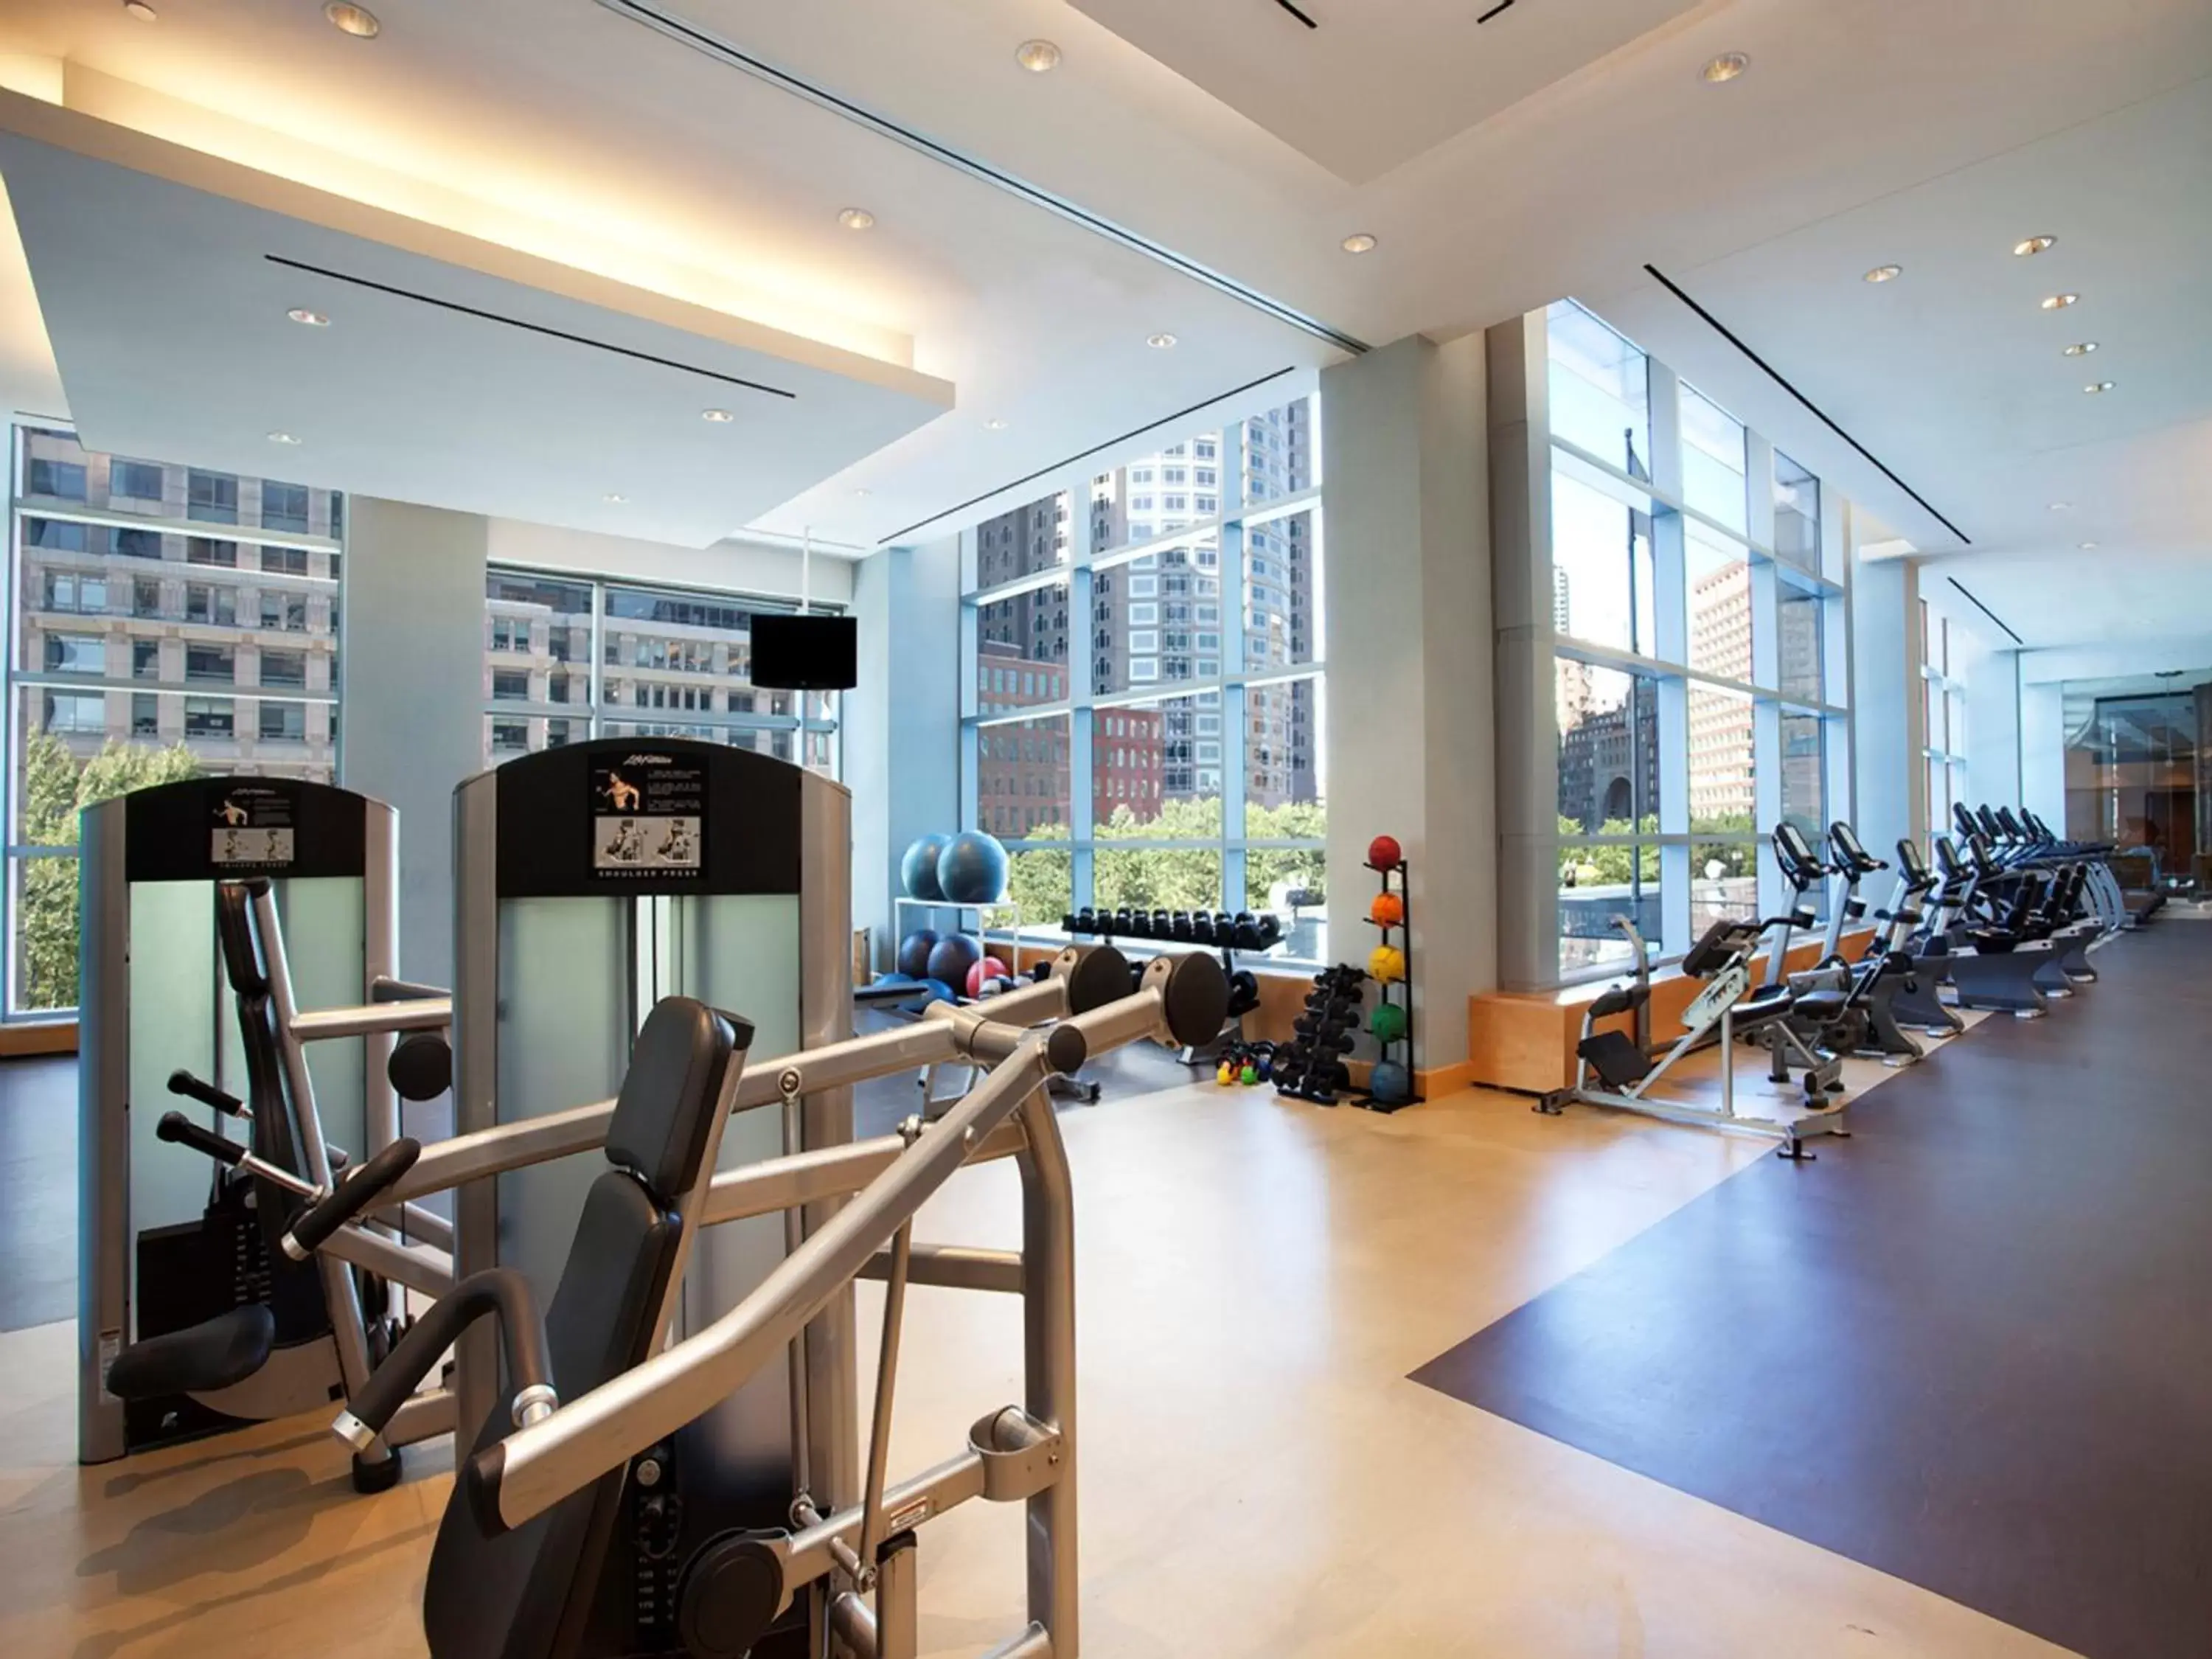 Fitness centre/facilities, Fitness Center/Facilities in InterContinental Boston, an IHG Hotel